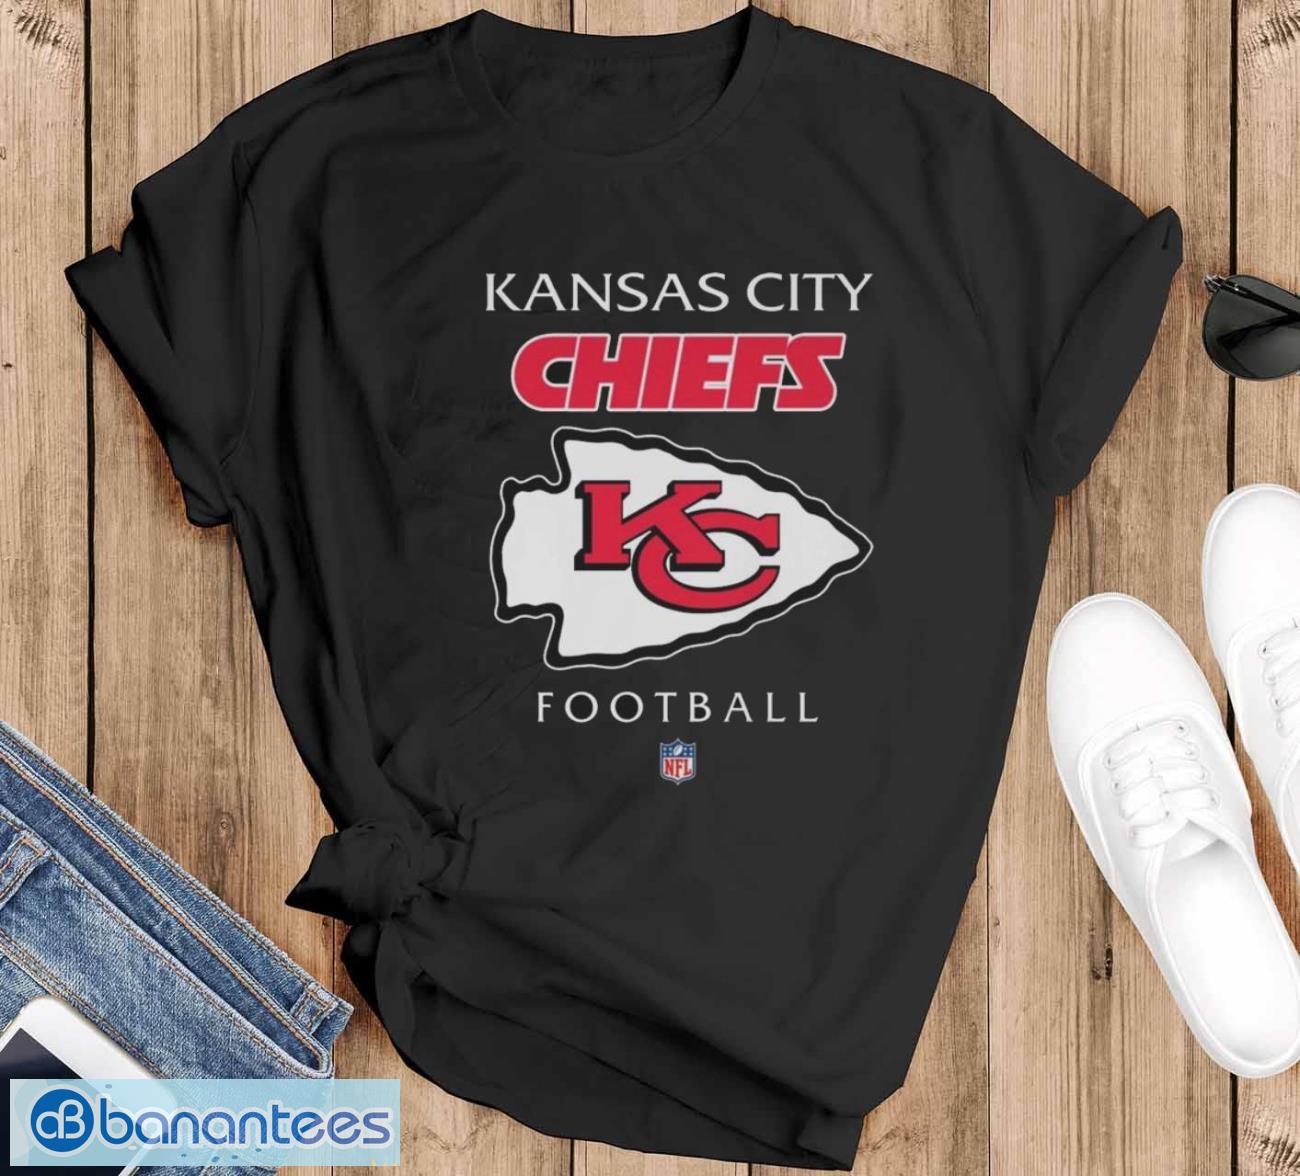 NFL Kansas City Chiefs Football shirt - Black T-Shirt